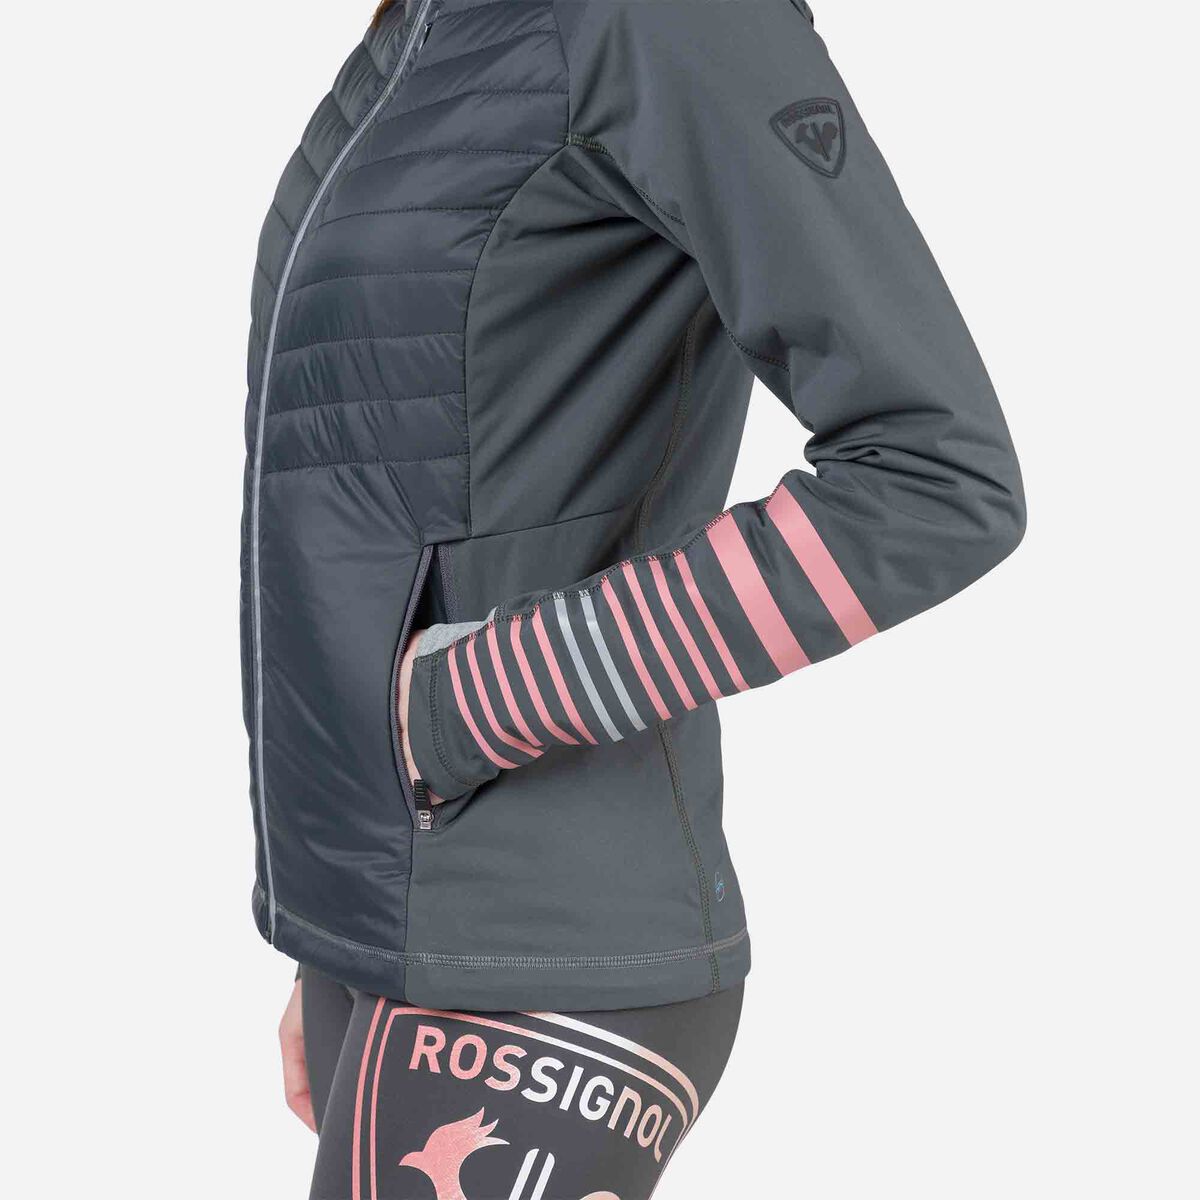 Rossignol Women's Poursuite Warm Jacket grey